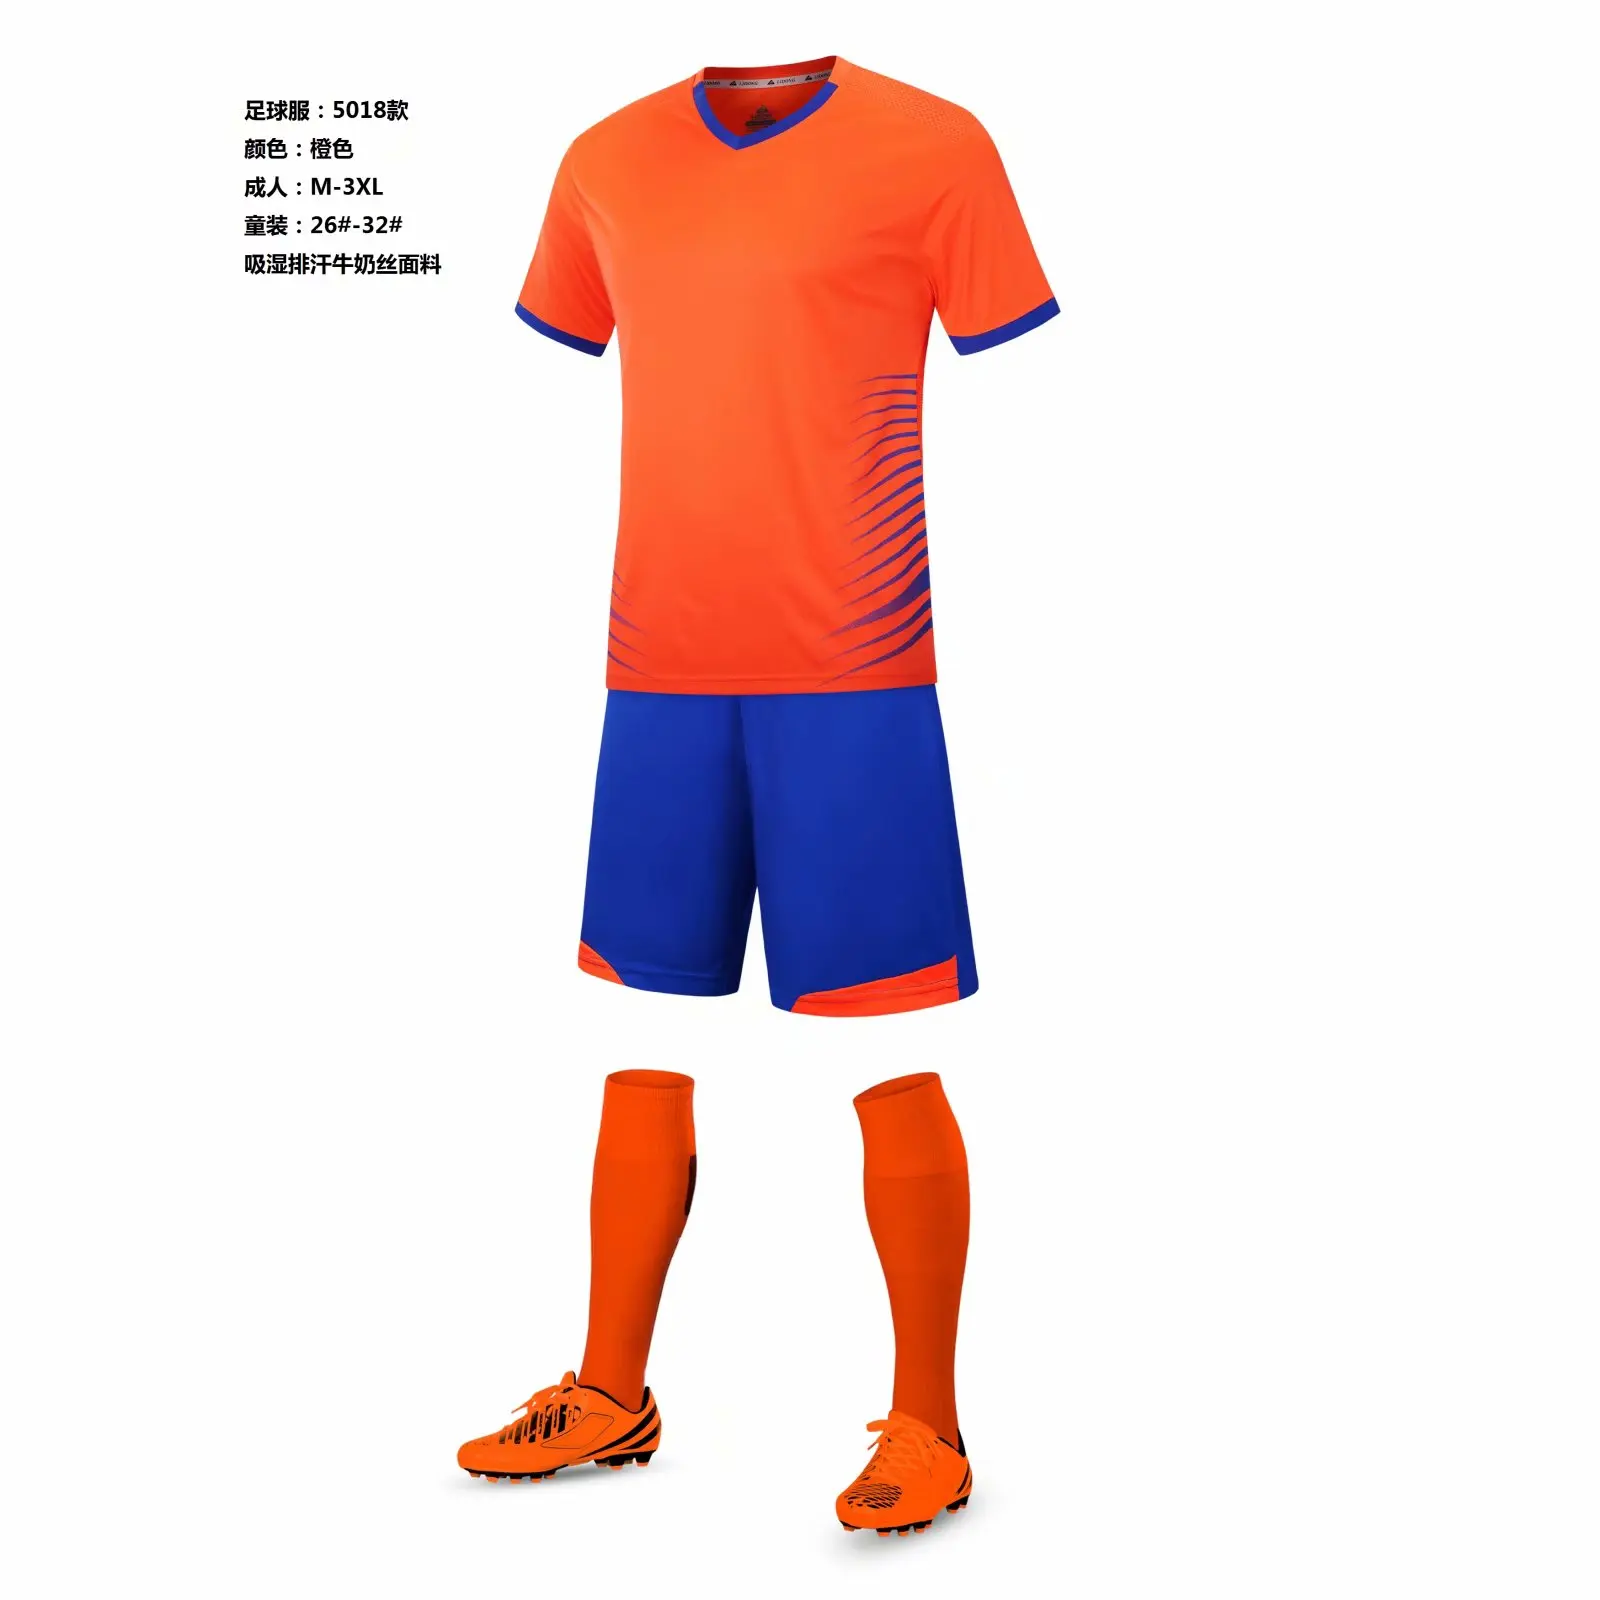 plain orange football jersey